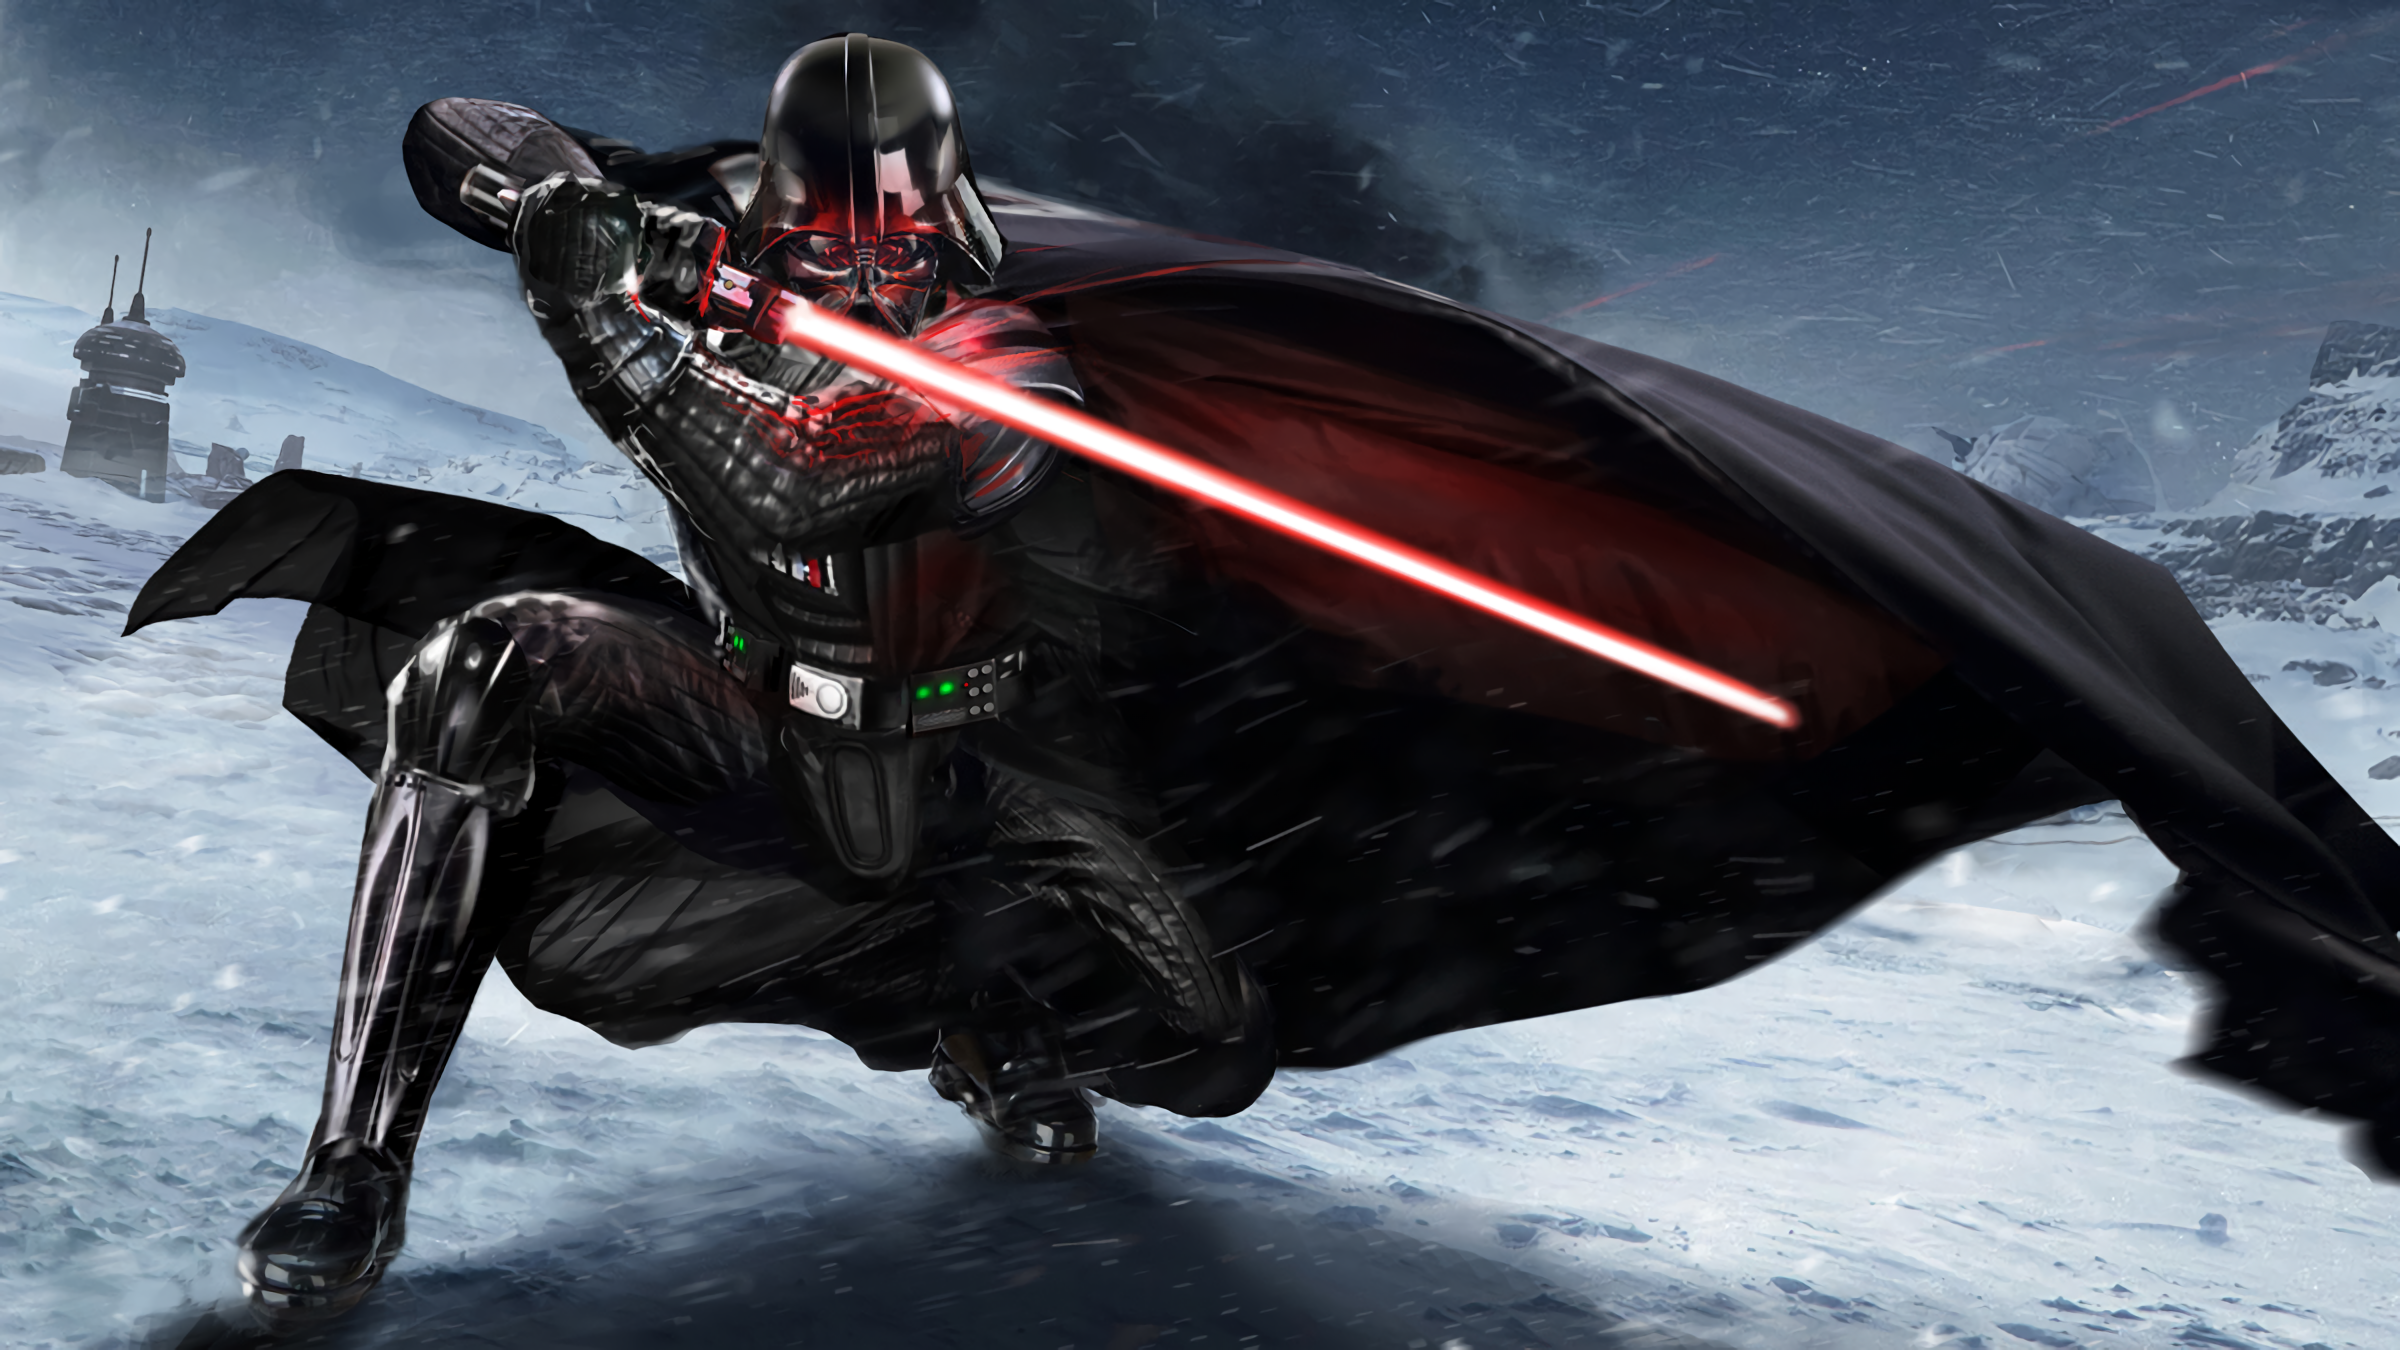 Darth Vader Star Wars Lightsaber Sci Fi Sith Star Wars Man Helmet Mask Glove Belt Cape Red Lightsabe 2400x1350